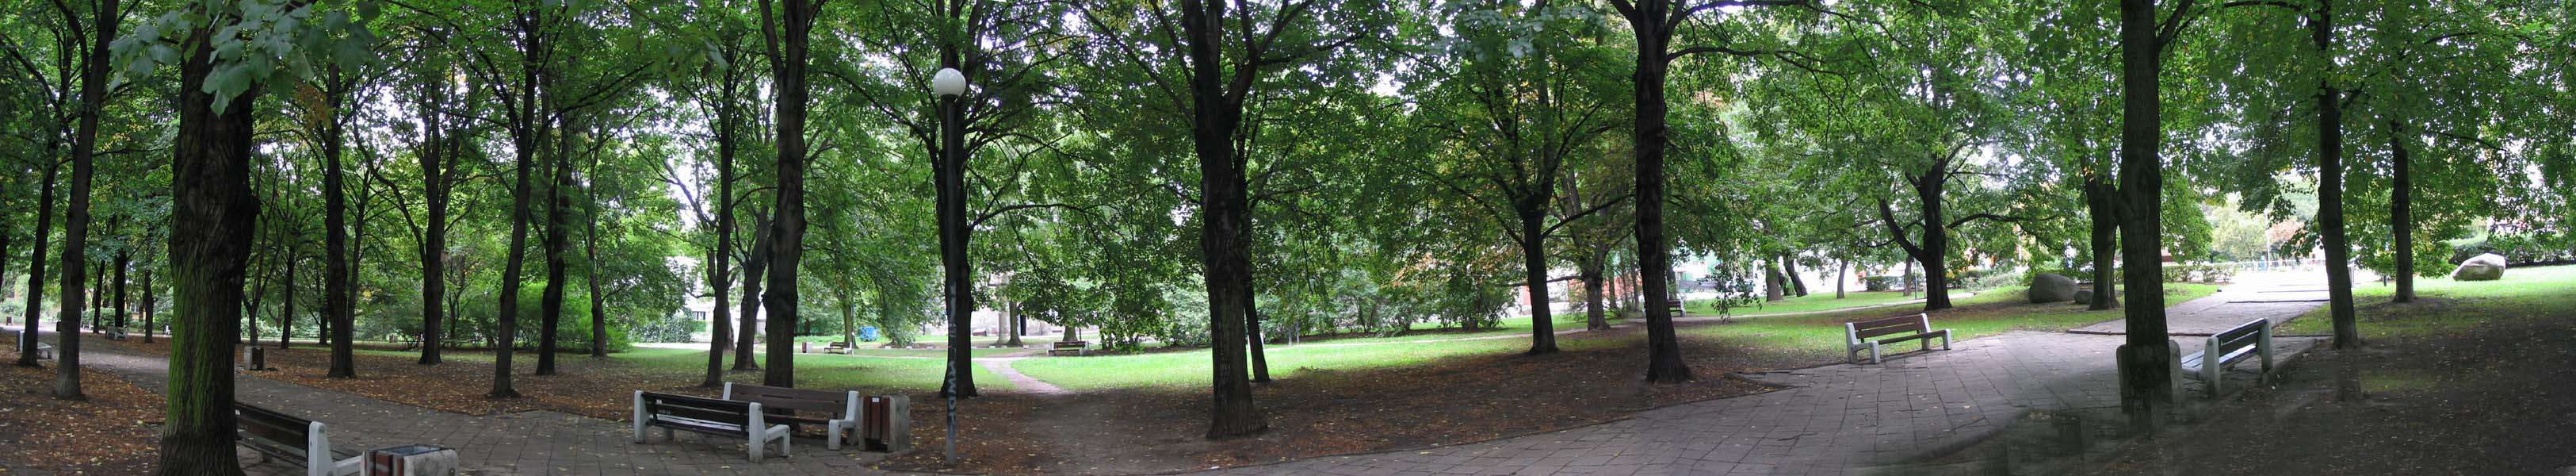 Park Morskie Oko, Warszawa